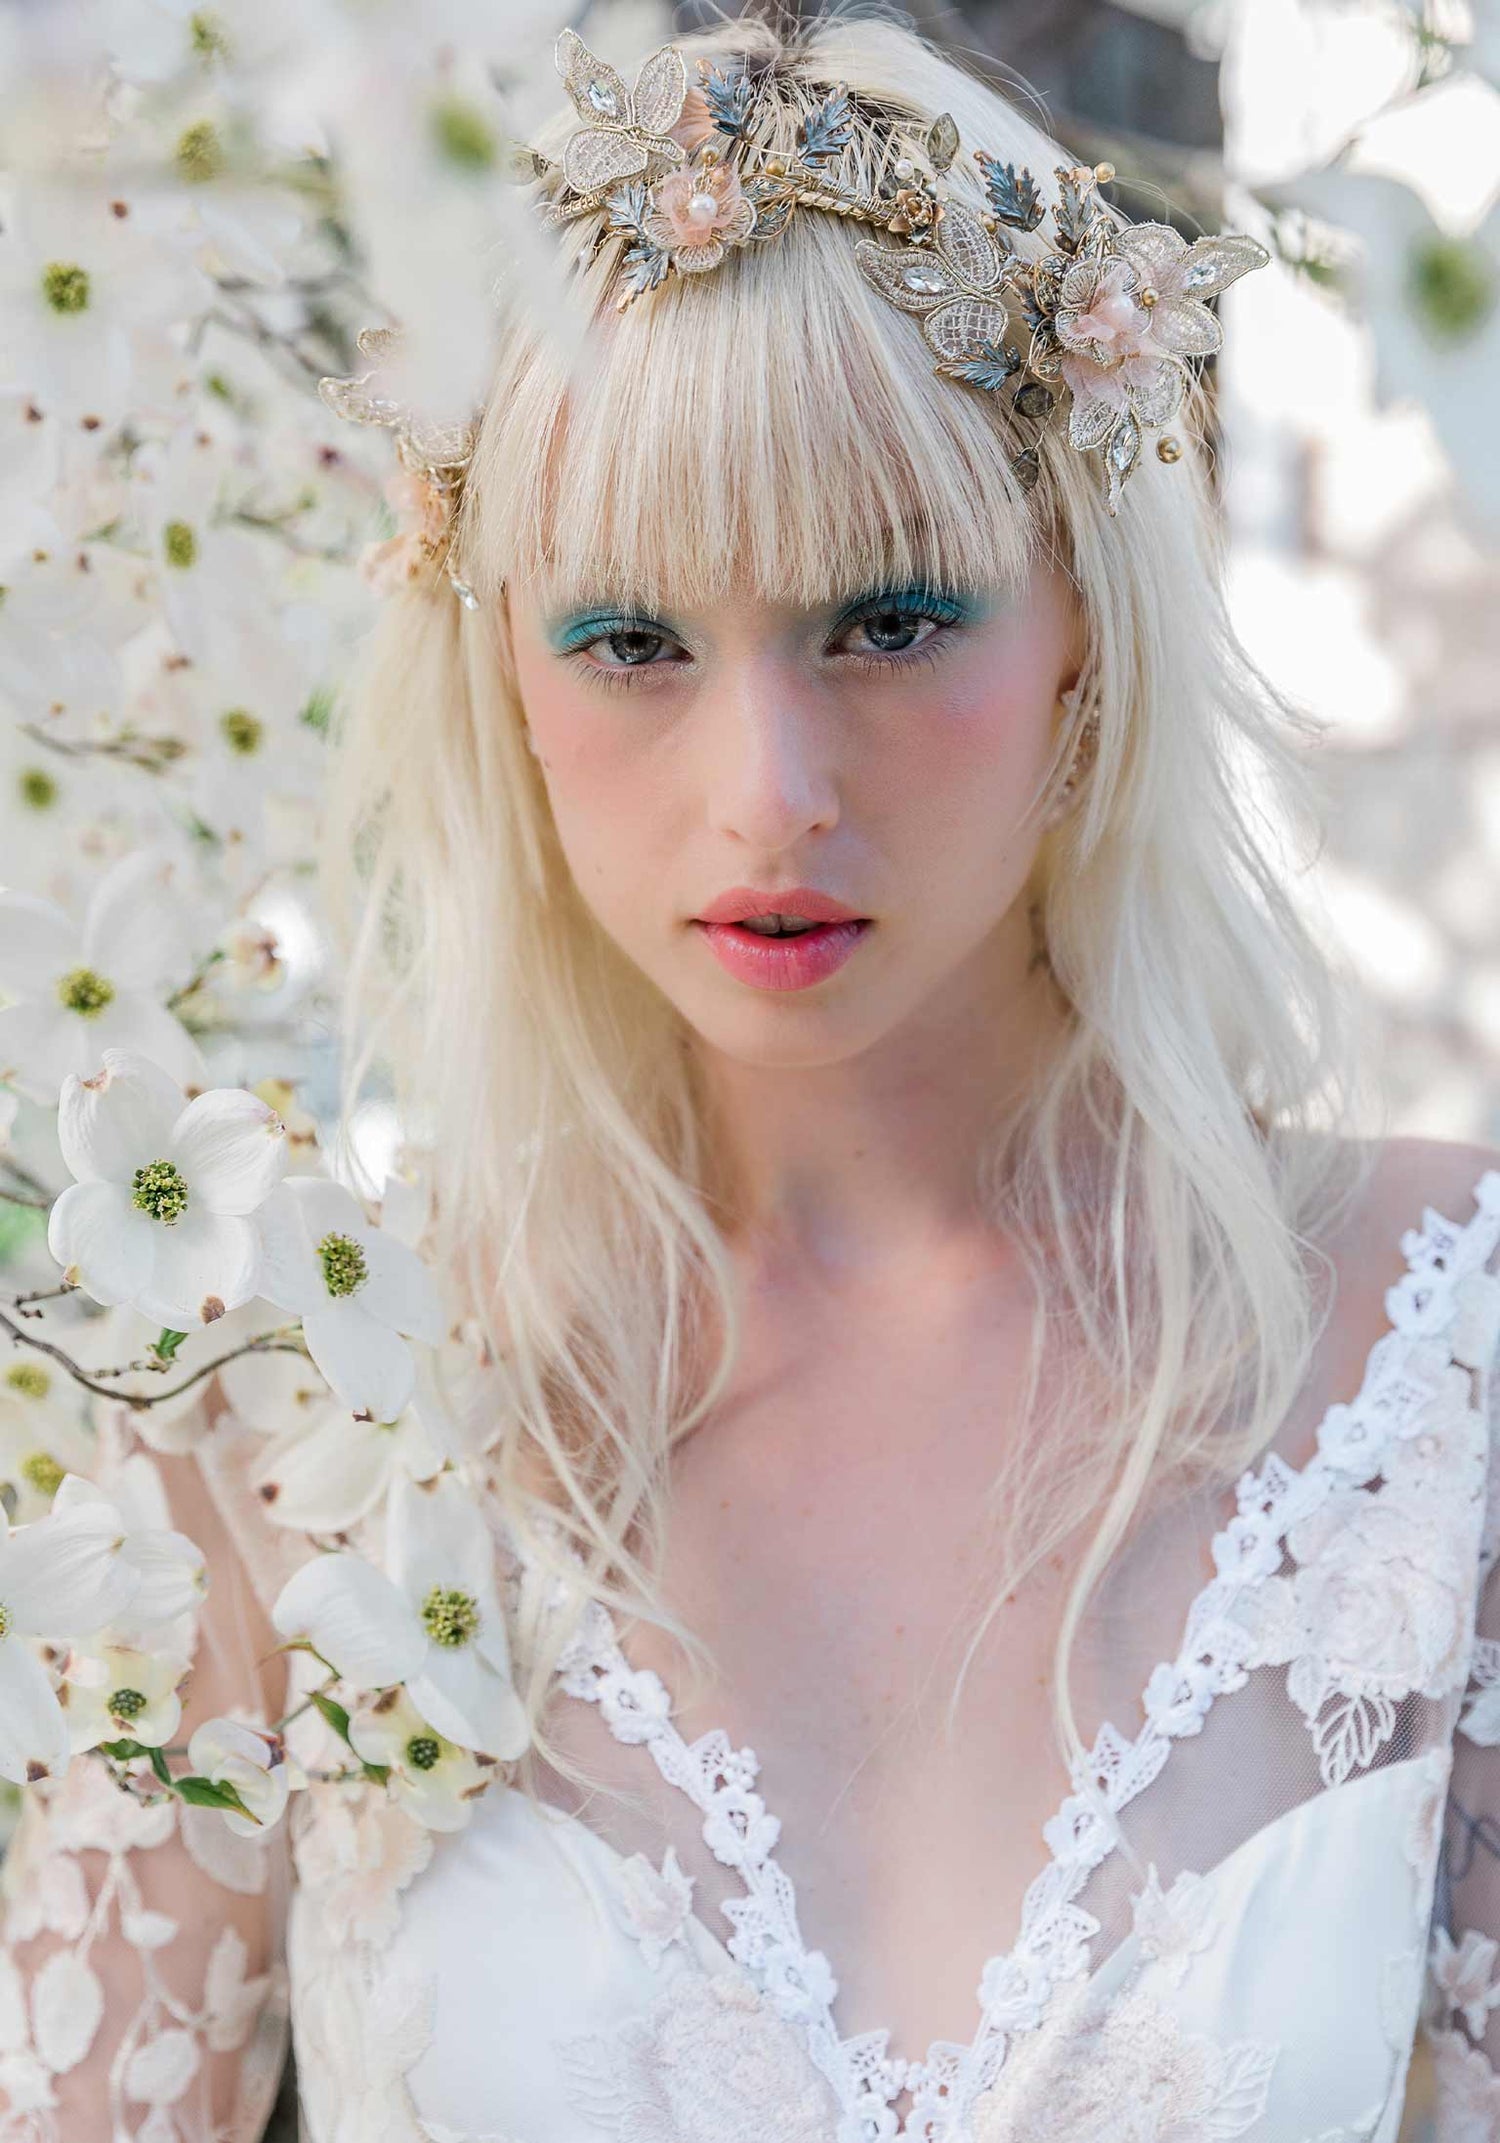 claire pettibone cherry blossom wedding dress